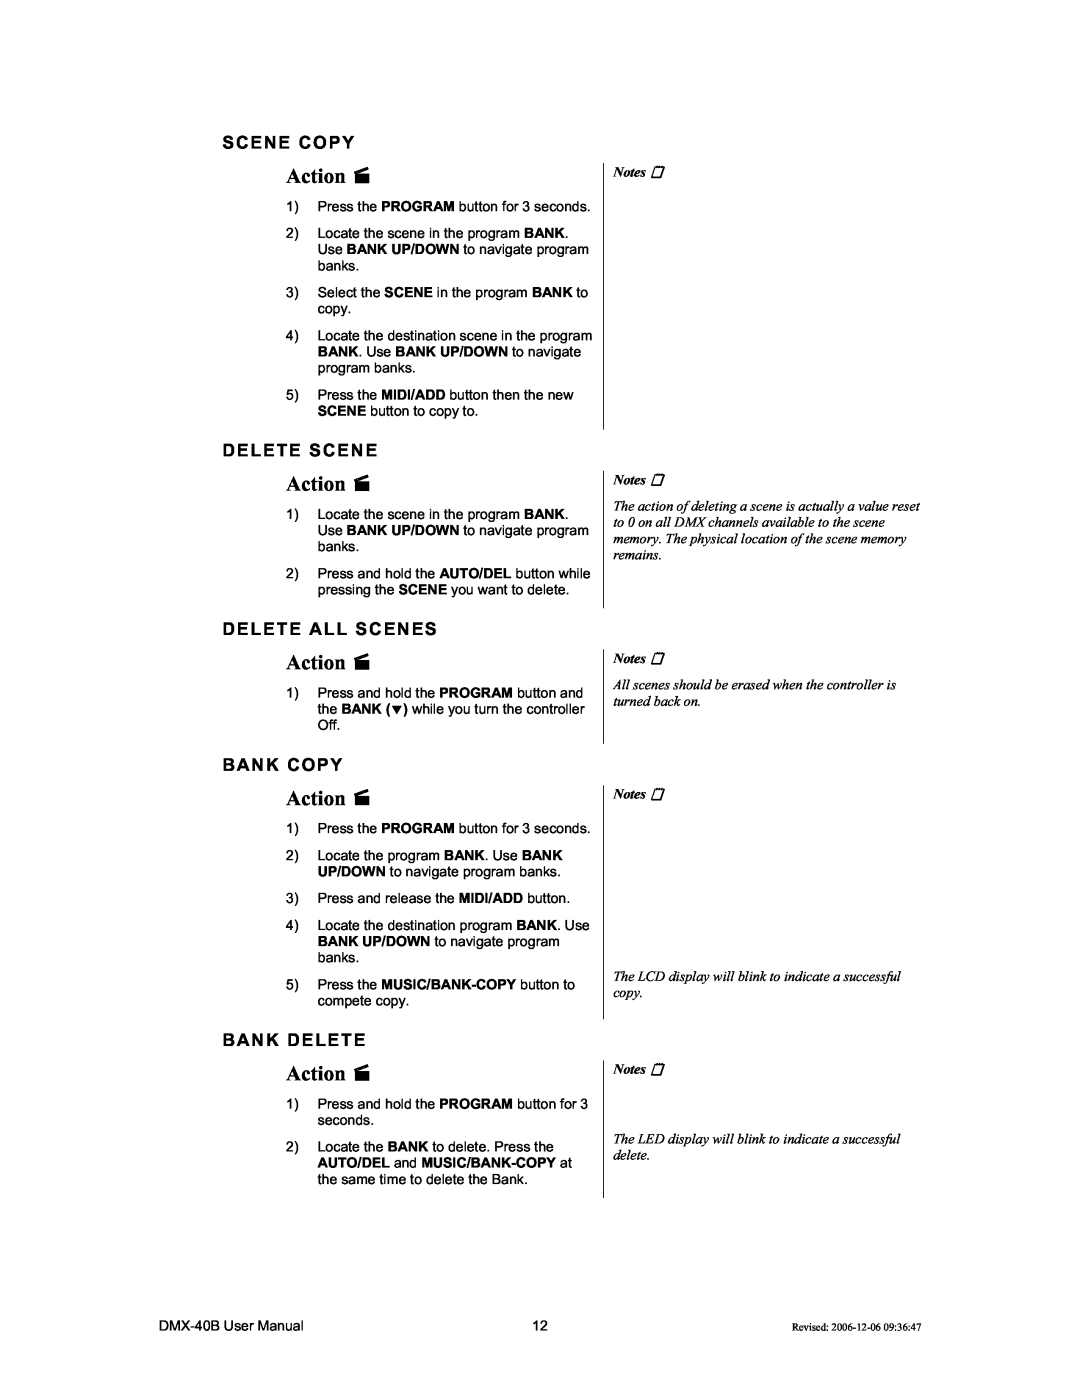 Chauvet DMX-40B user manual Scene Copy, Delete Scene, Delete All Scenes, Bank Copy, Bank Delete, Action, Notes Notes 